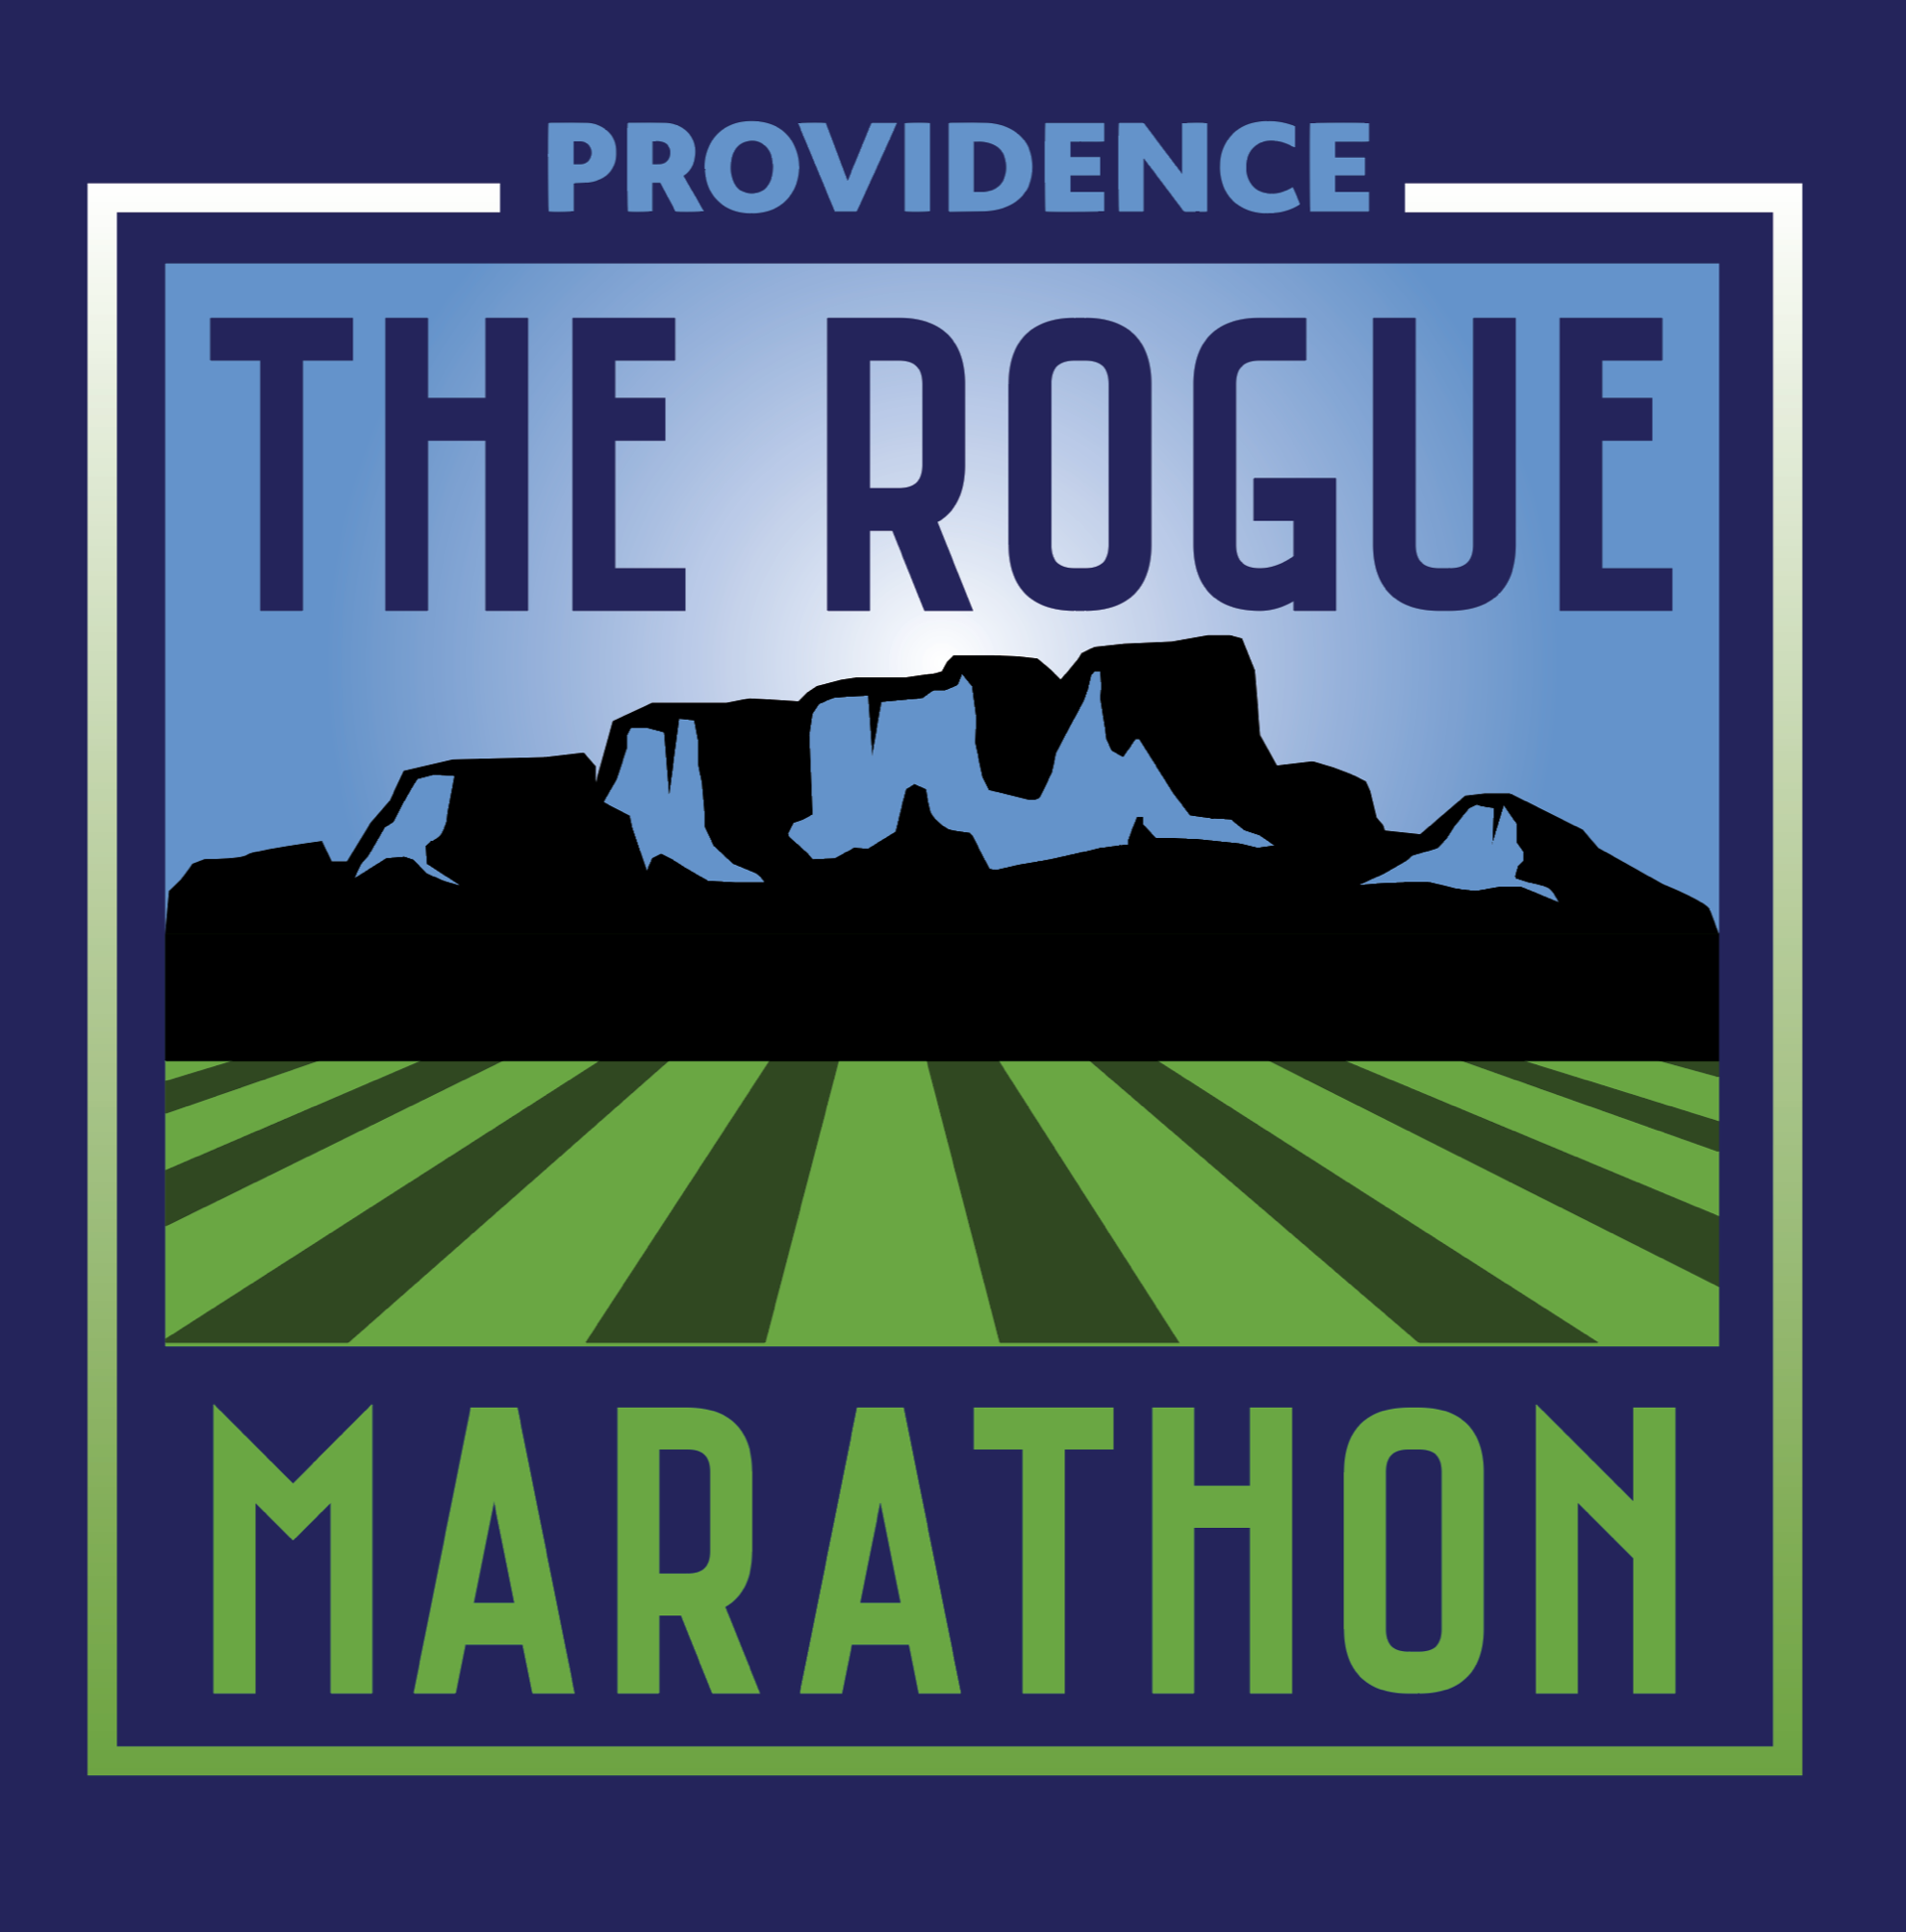 Rogue marathon